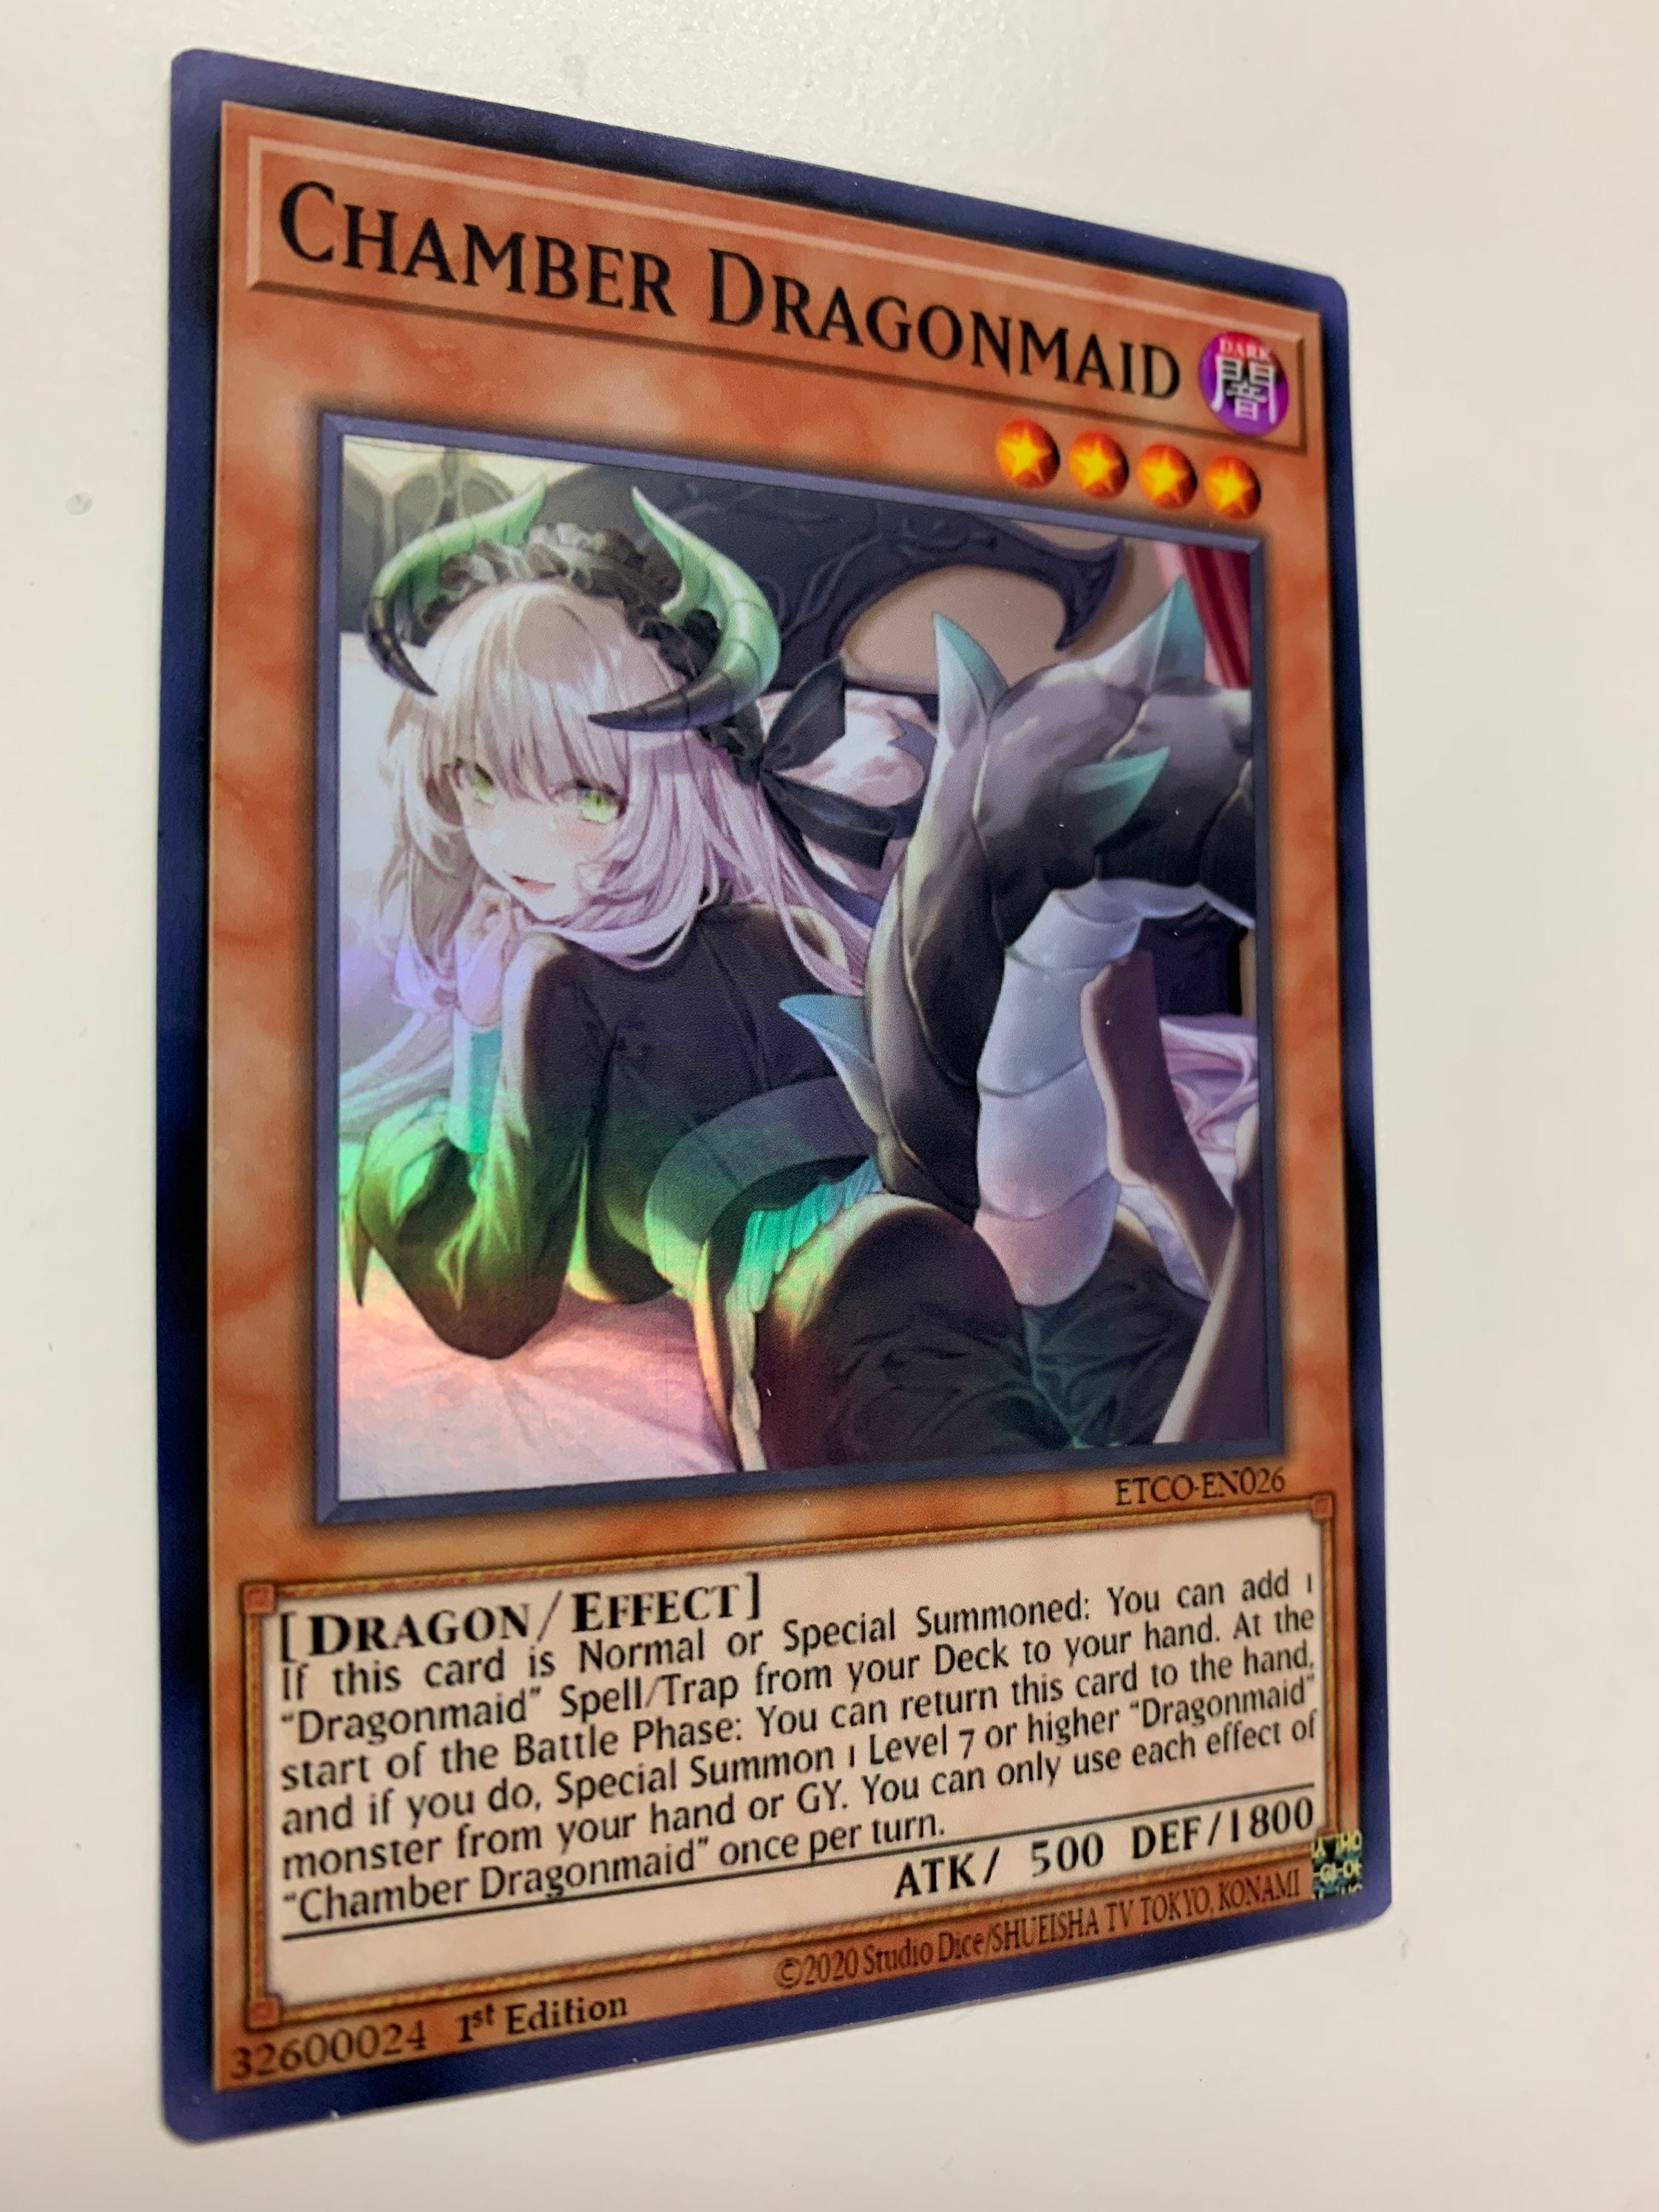 Chamber dragonmaid